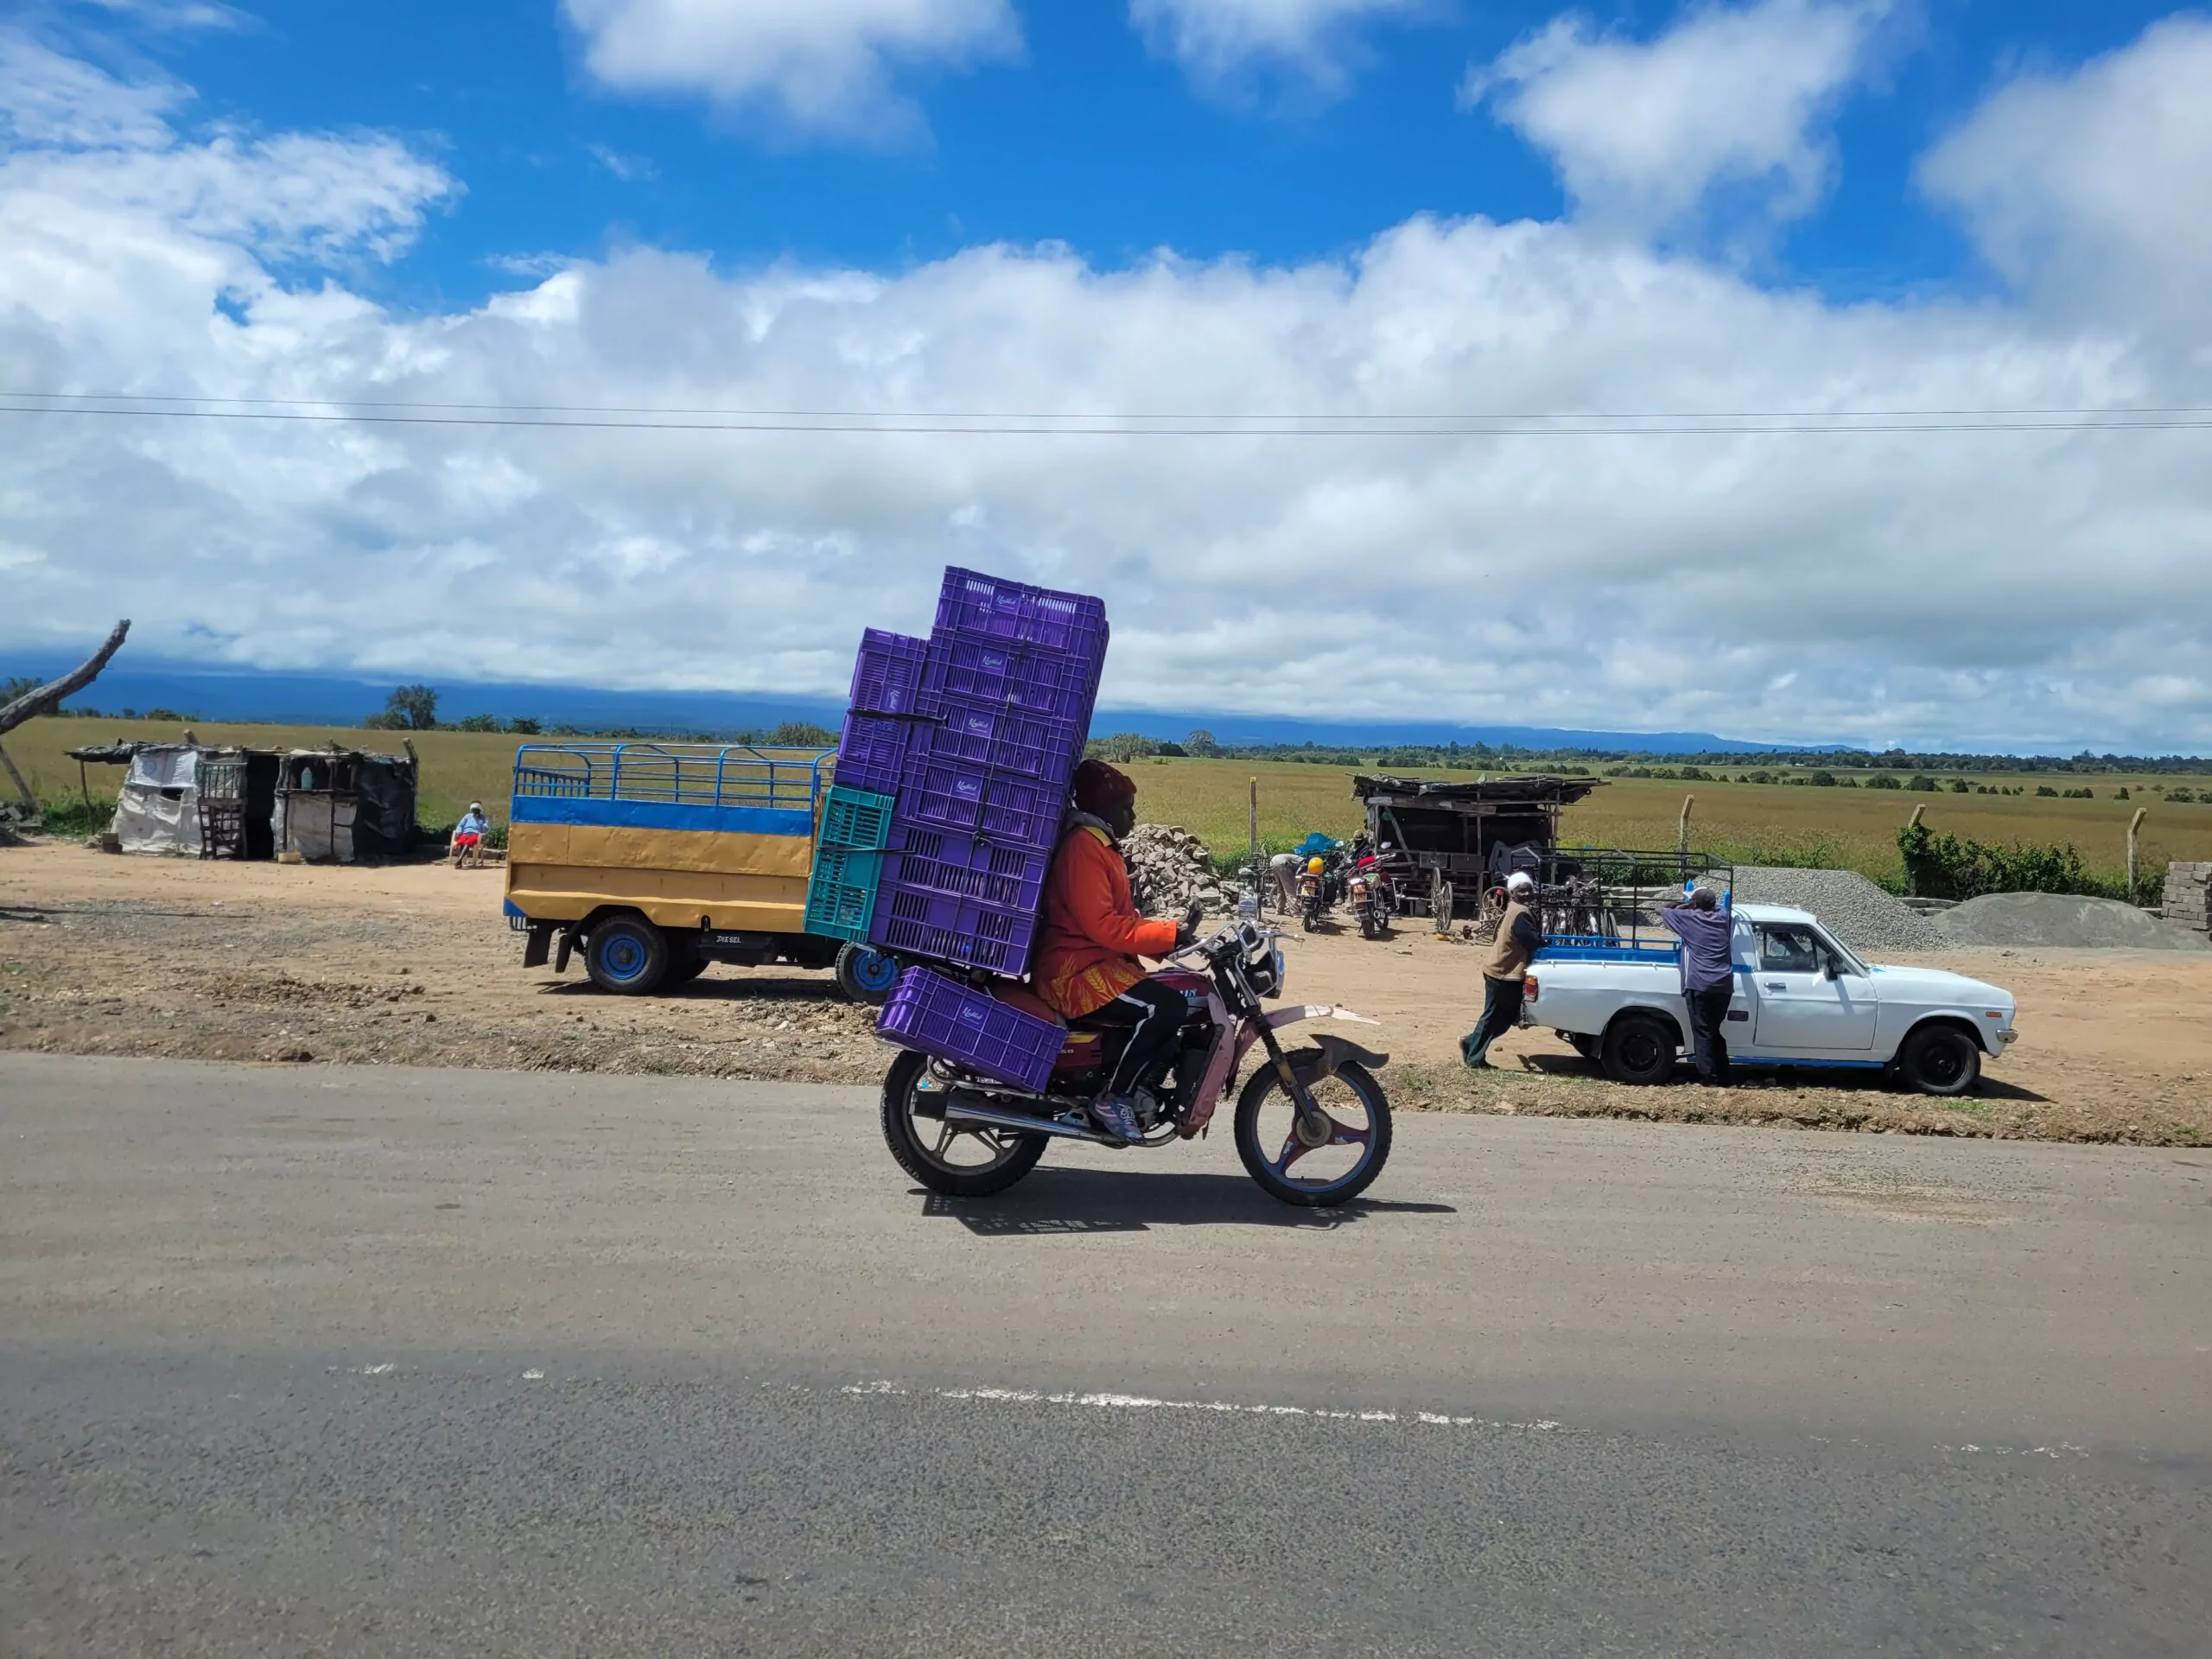 Mietwagenreise durch Kenia on the road